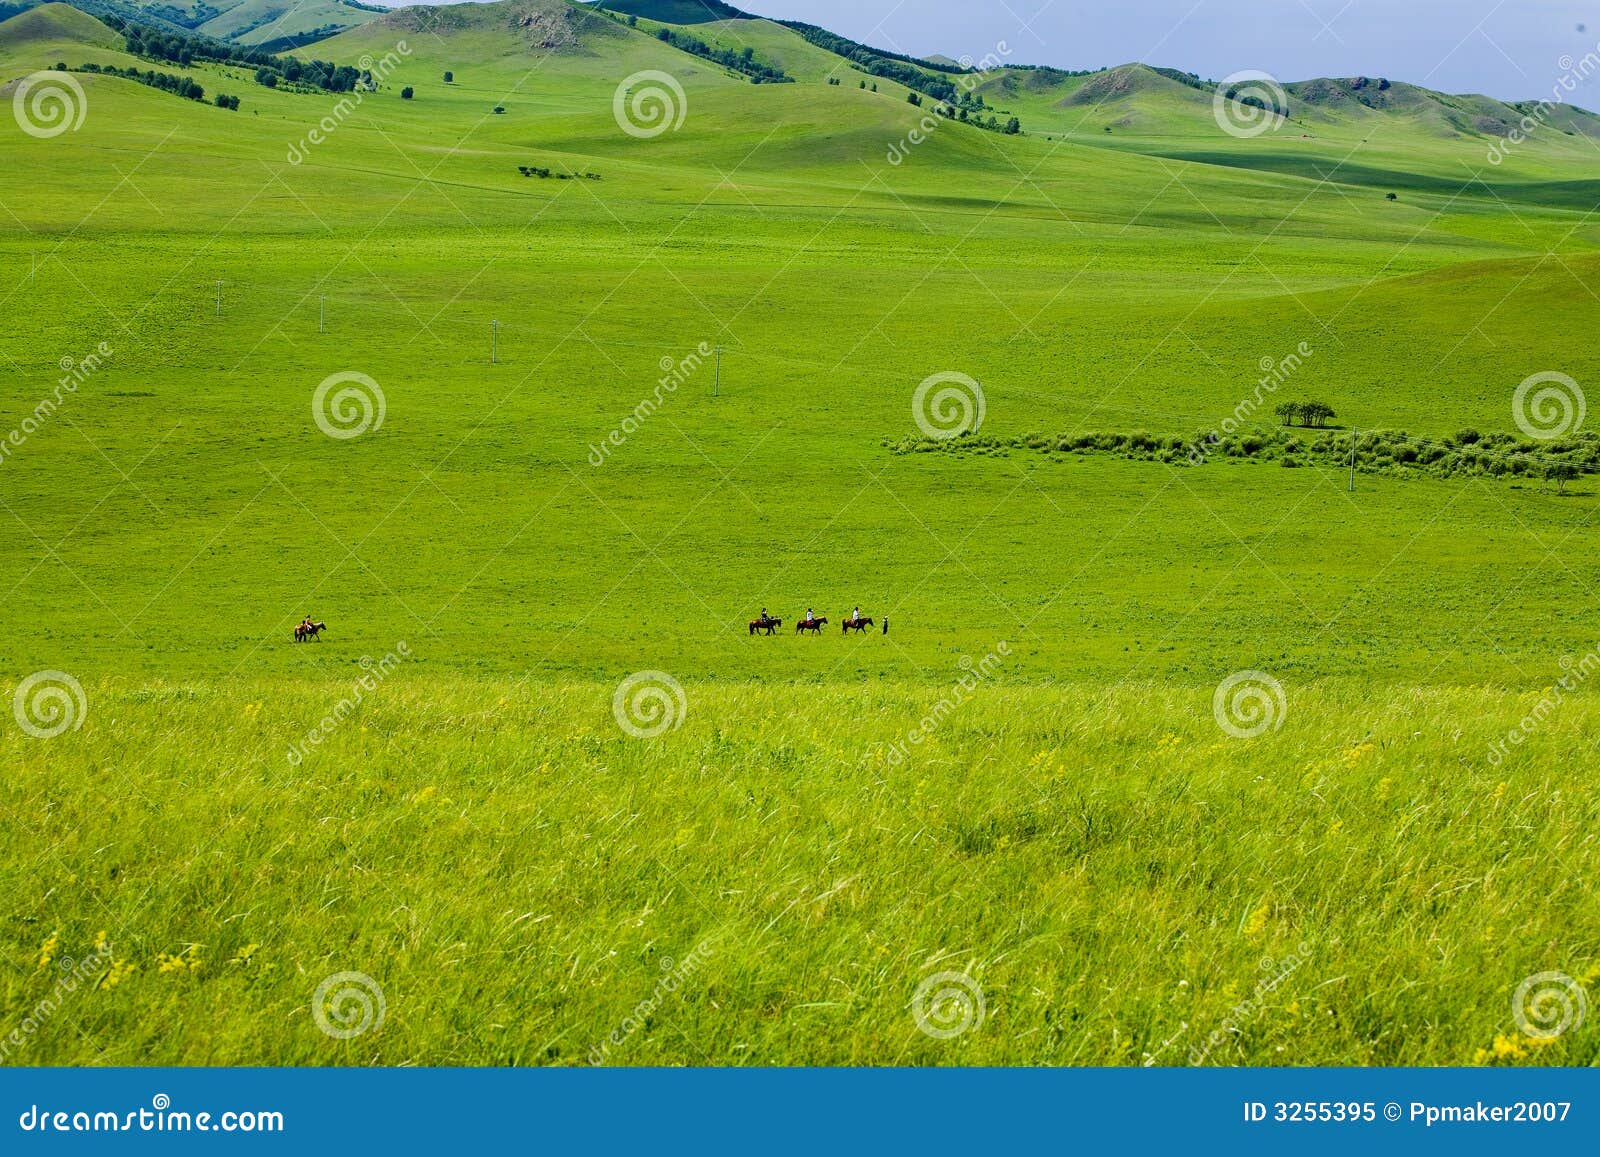 ride on the broad grassland